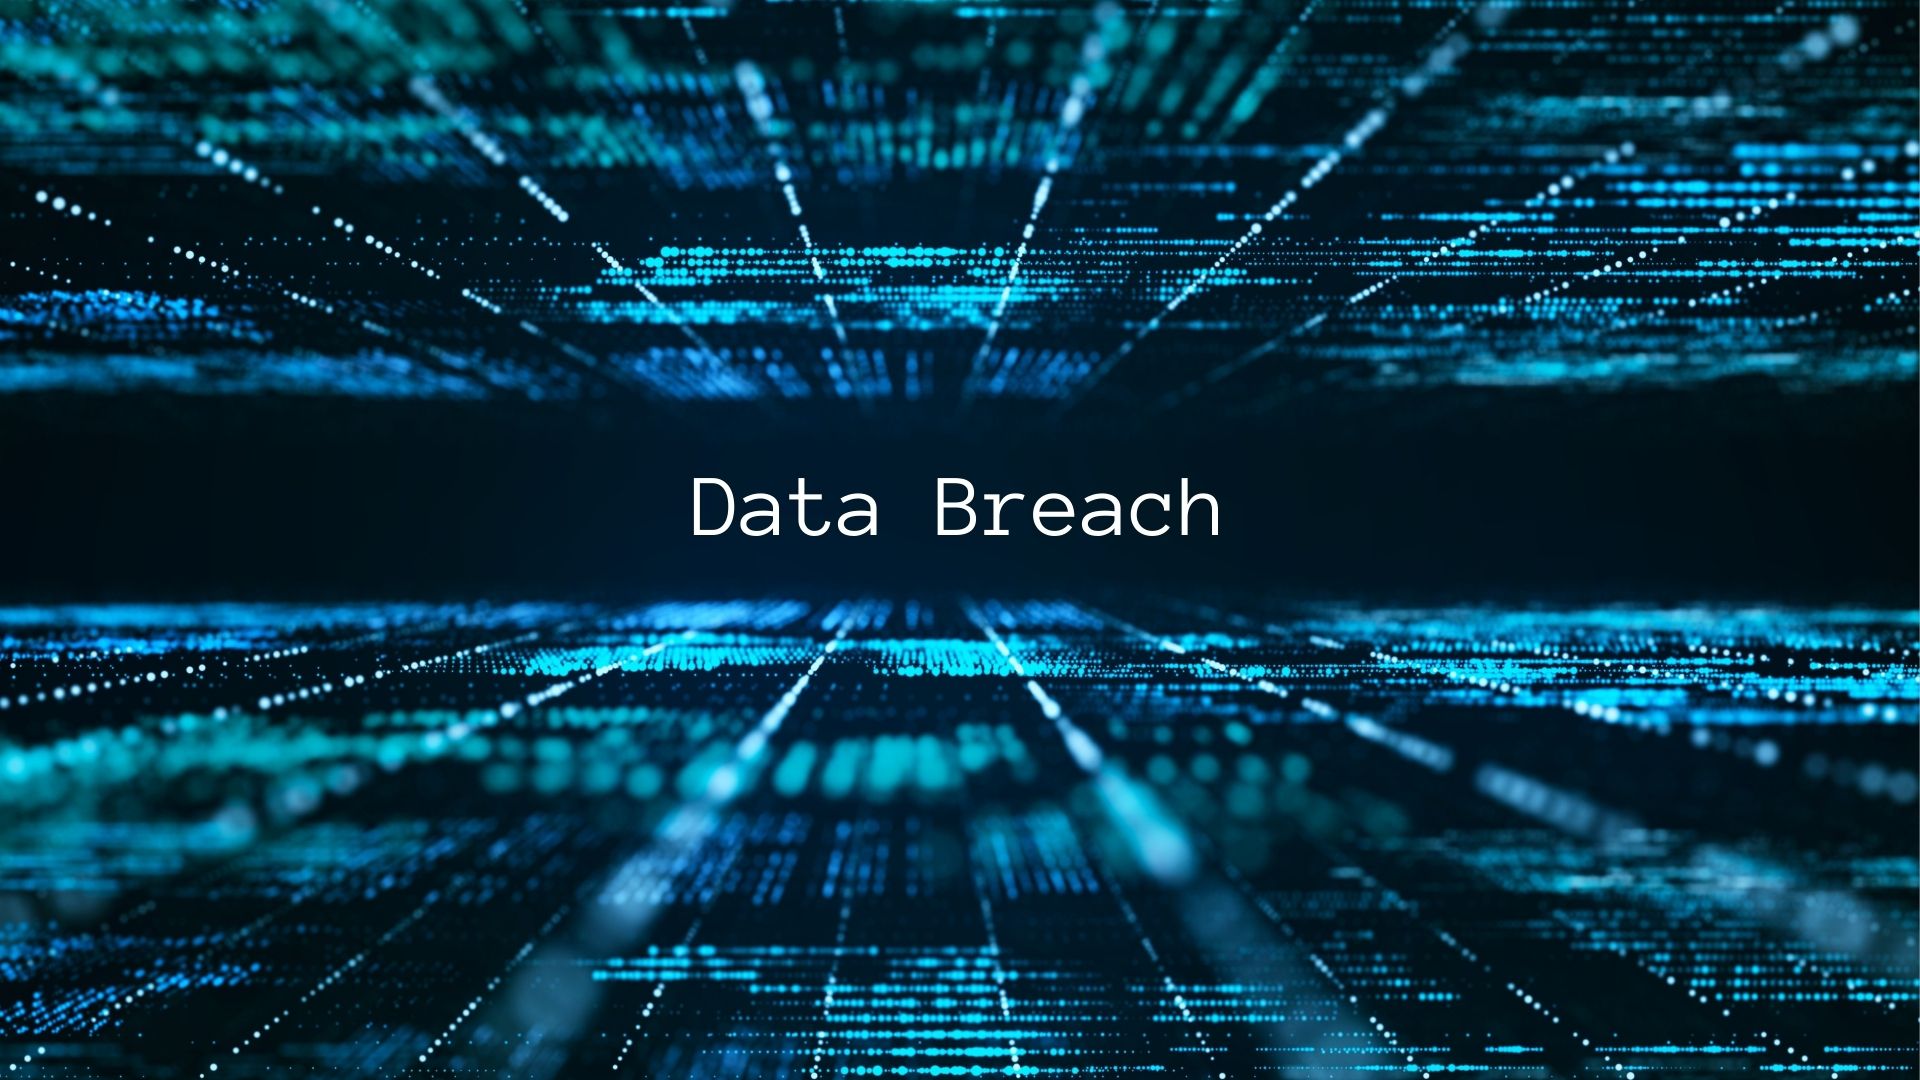 https://www.groundlabs.com/wp-content/uploads/2014/08/Data-breach.jpg